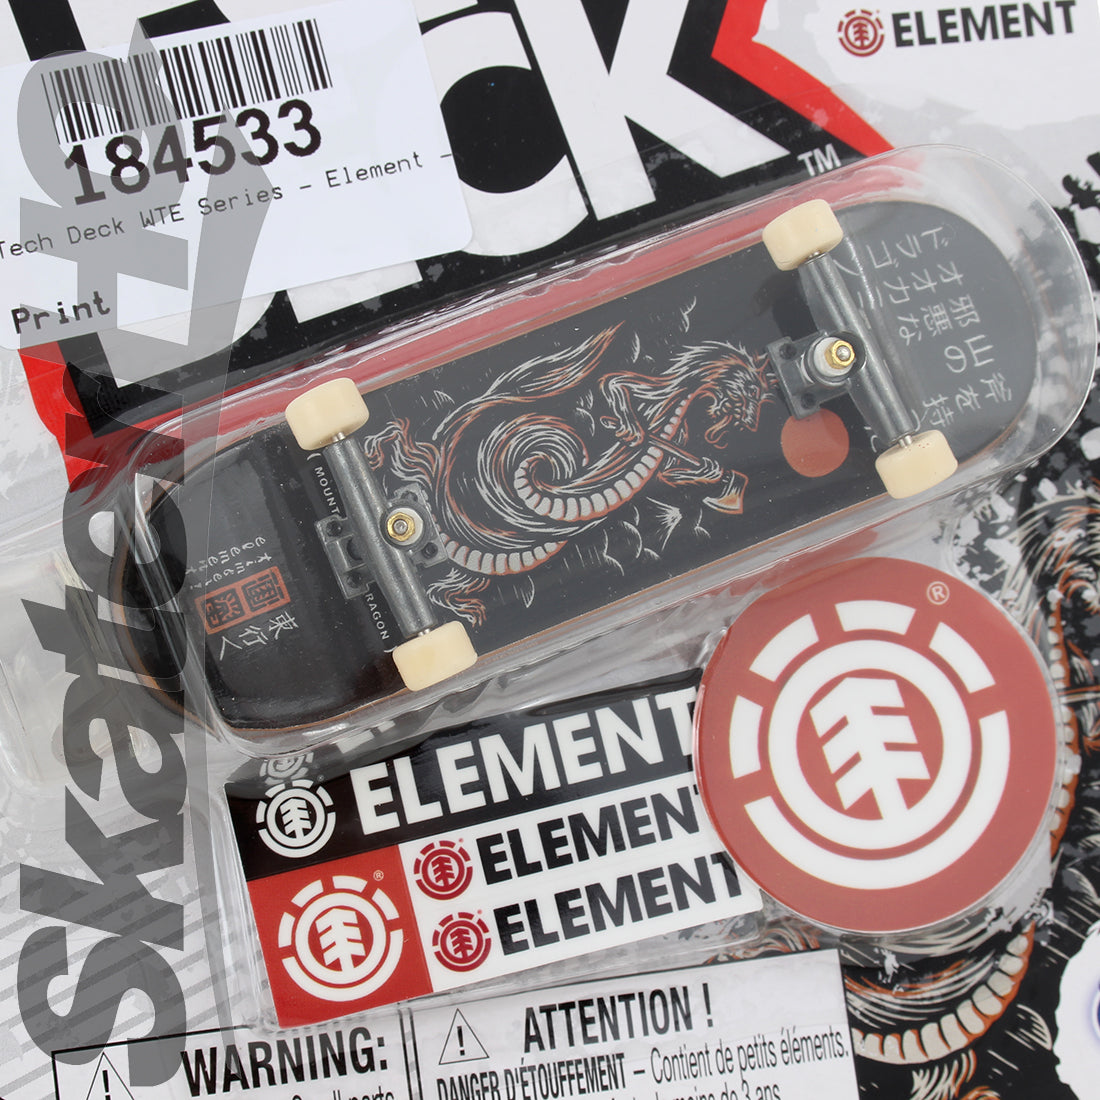 Tech Deck WTE Series - Element - Japan Dragon Skateboard Accessories